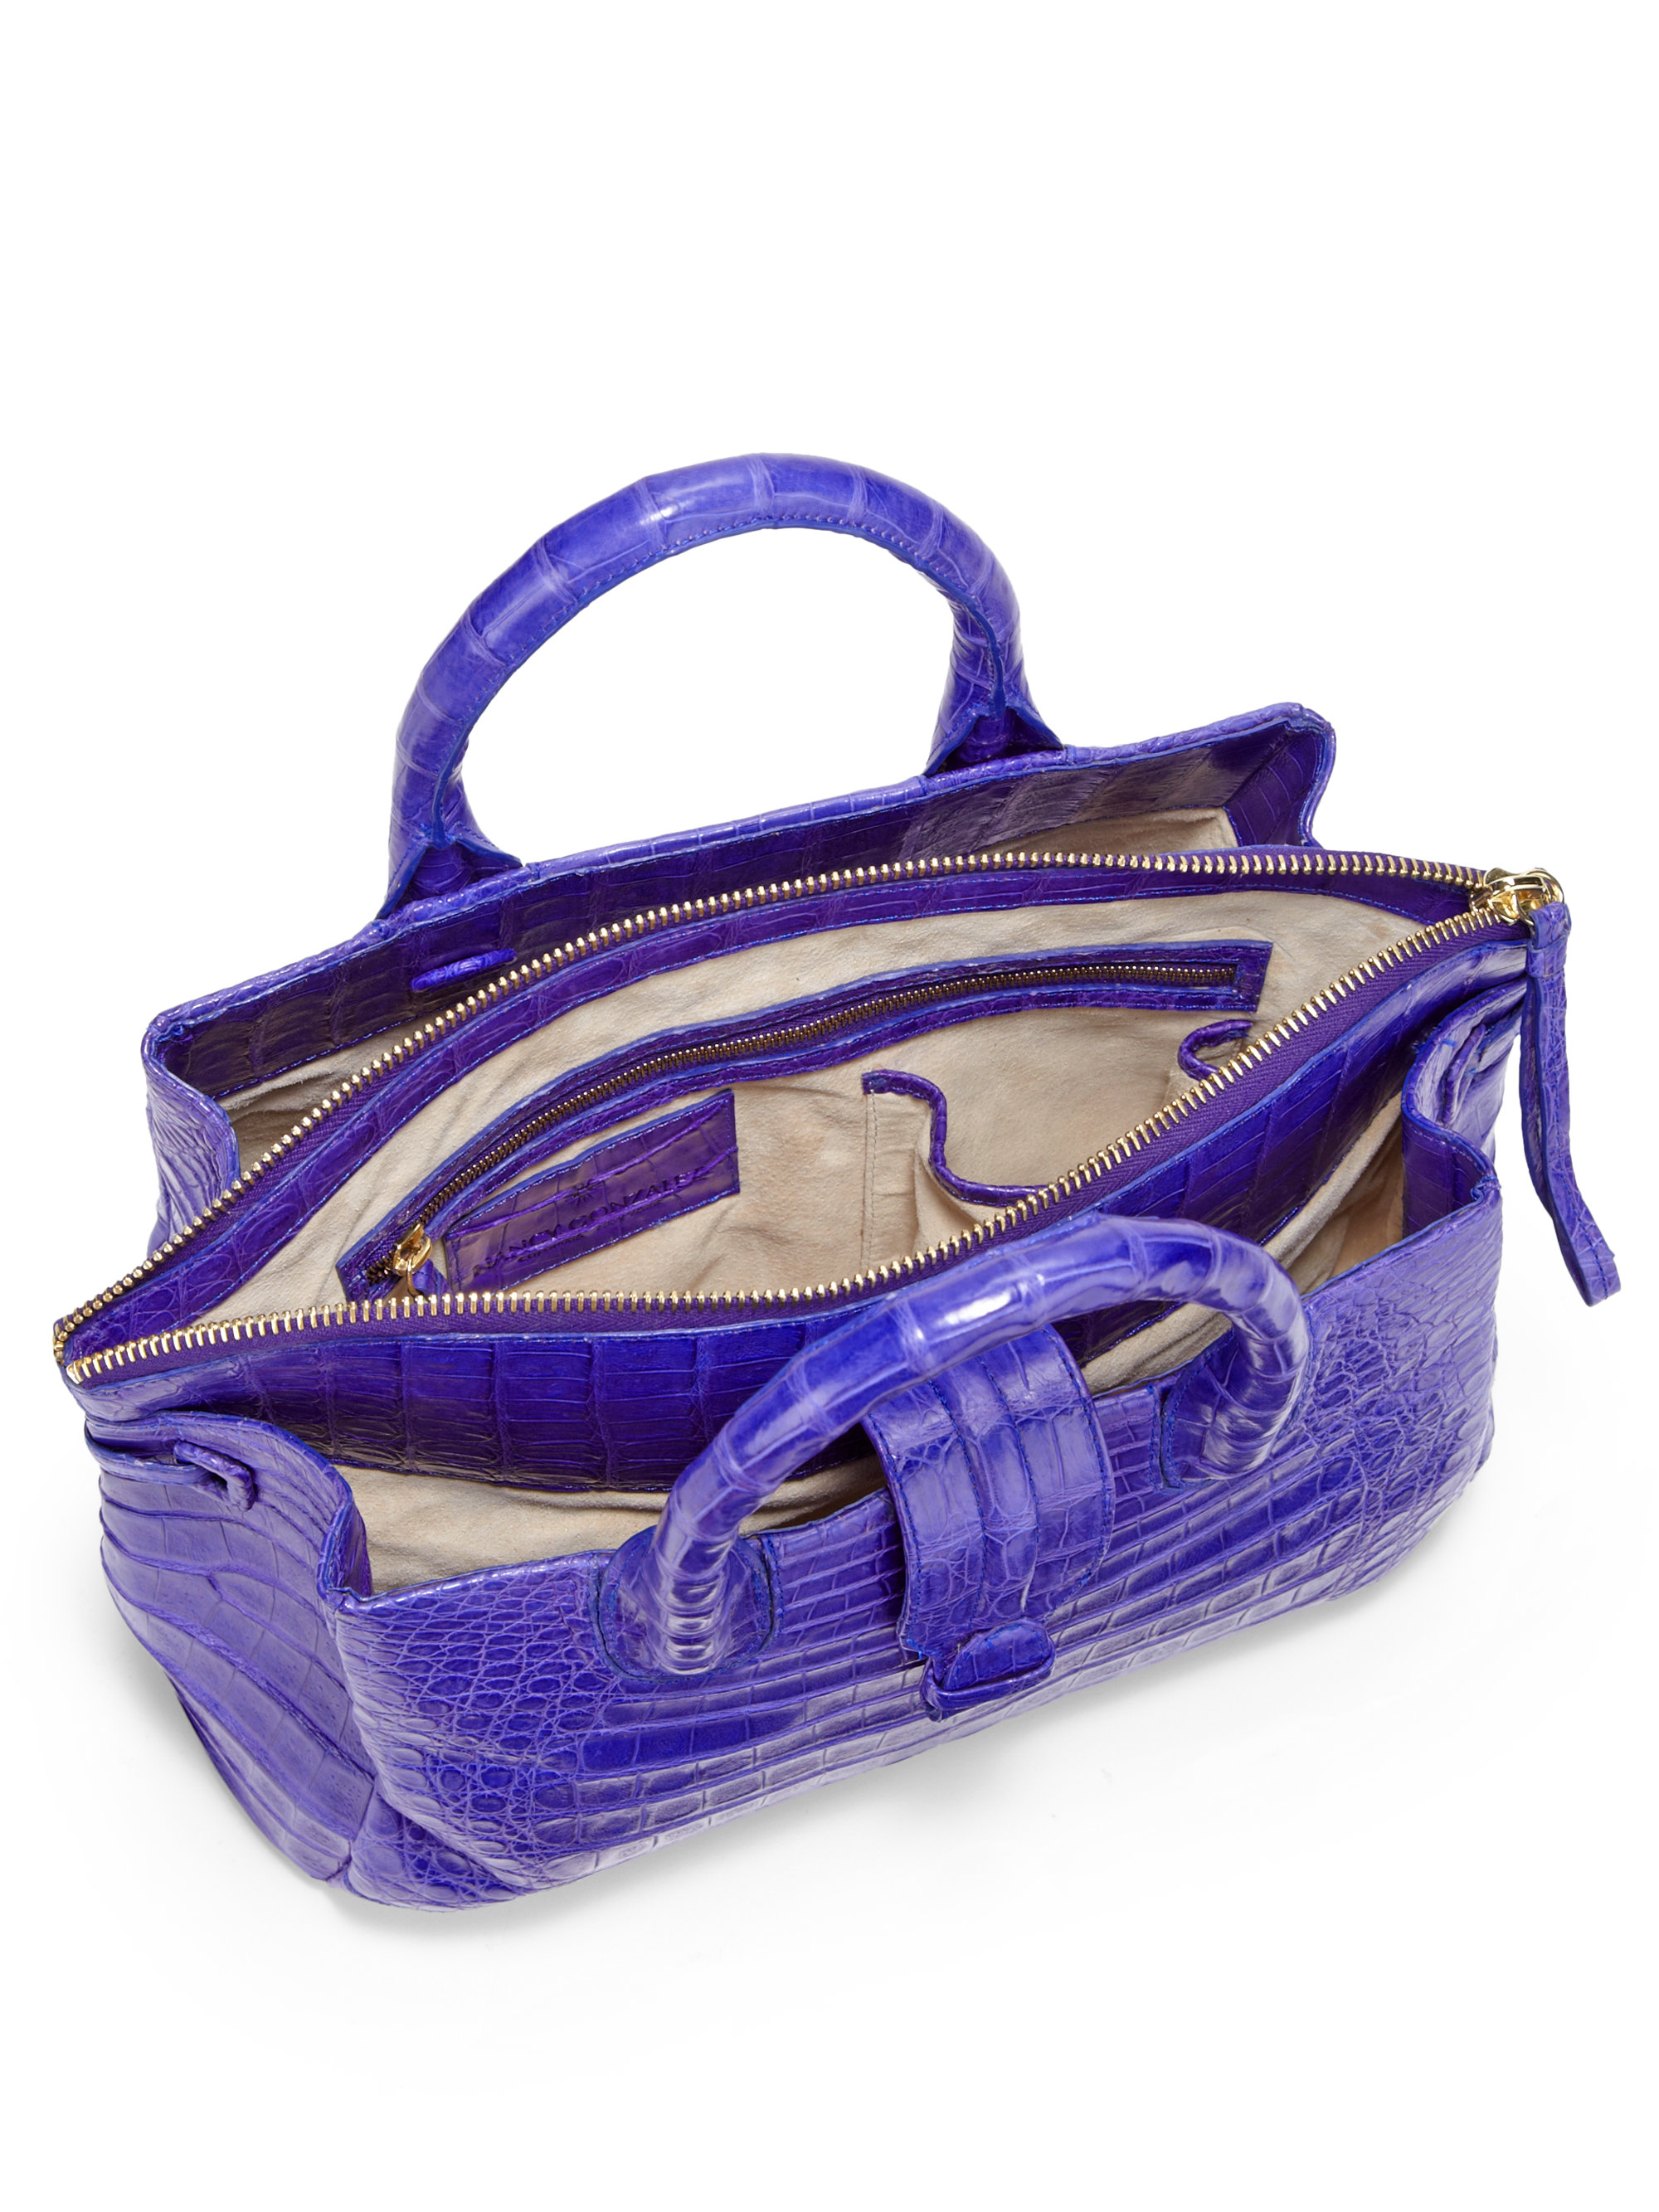 prada black canvas bag - Nancy gonzalez Christina Small Crocodile Tote in Purple | Lyst